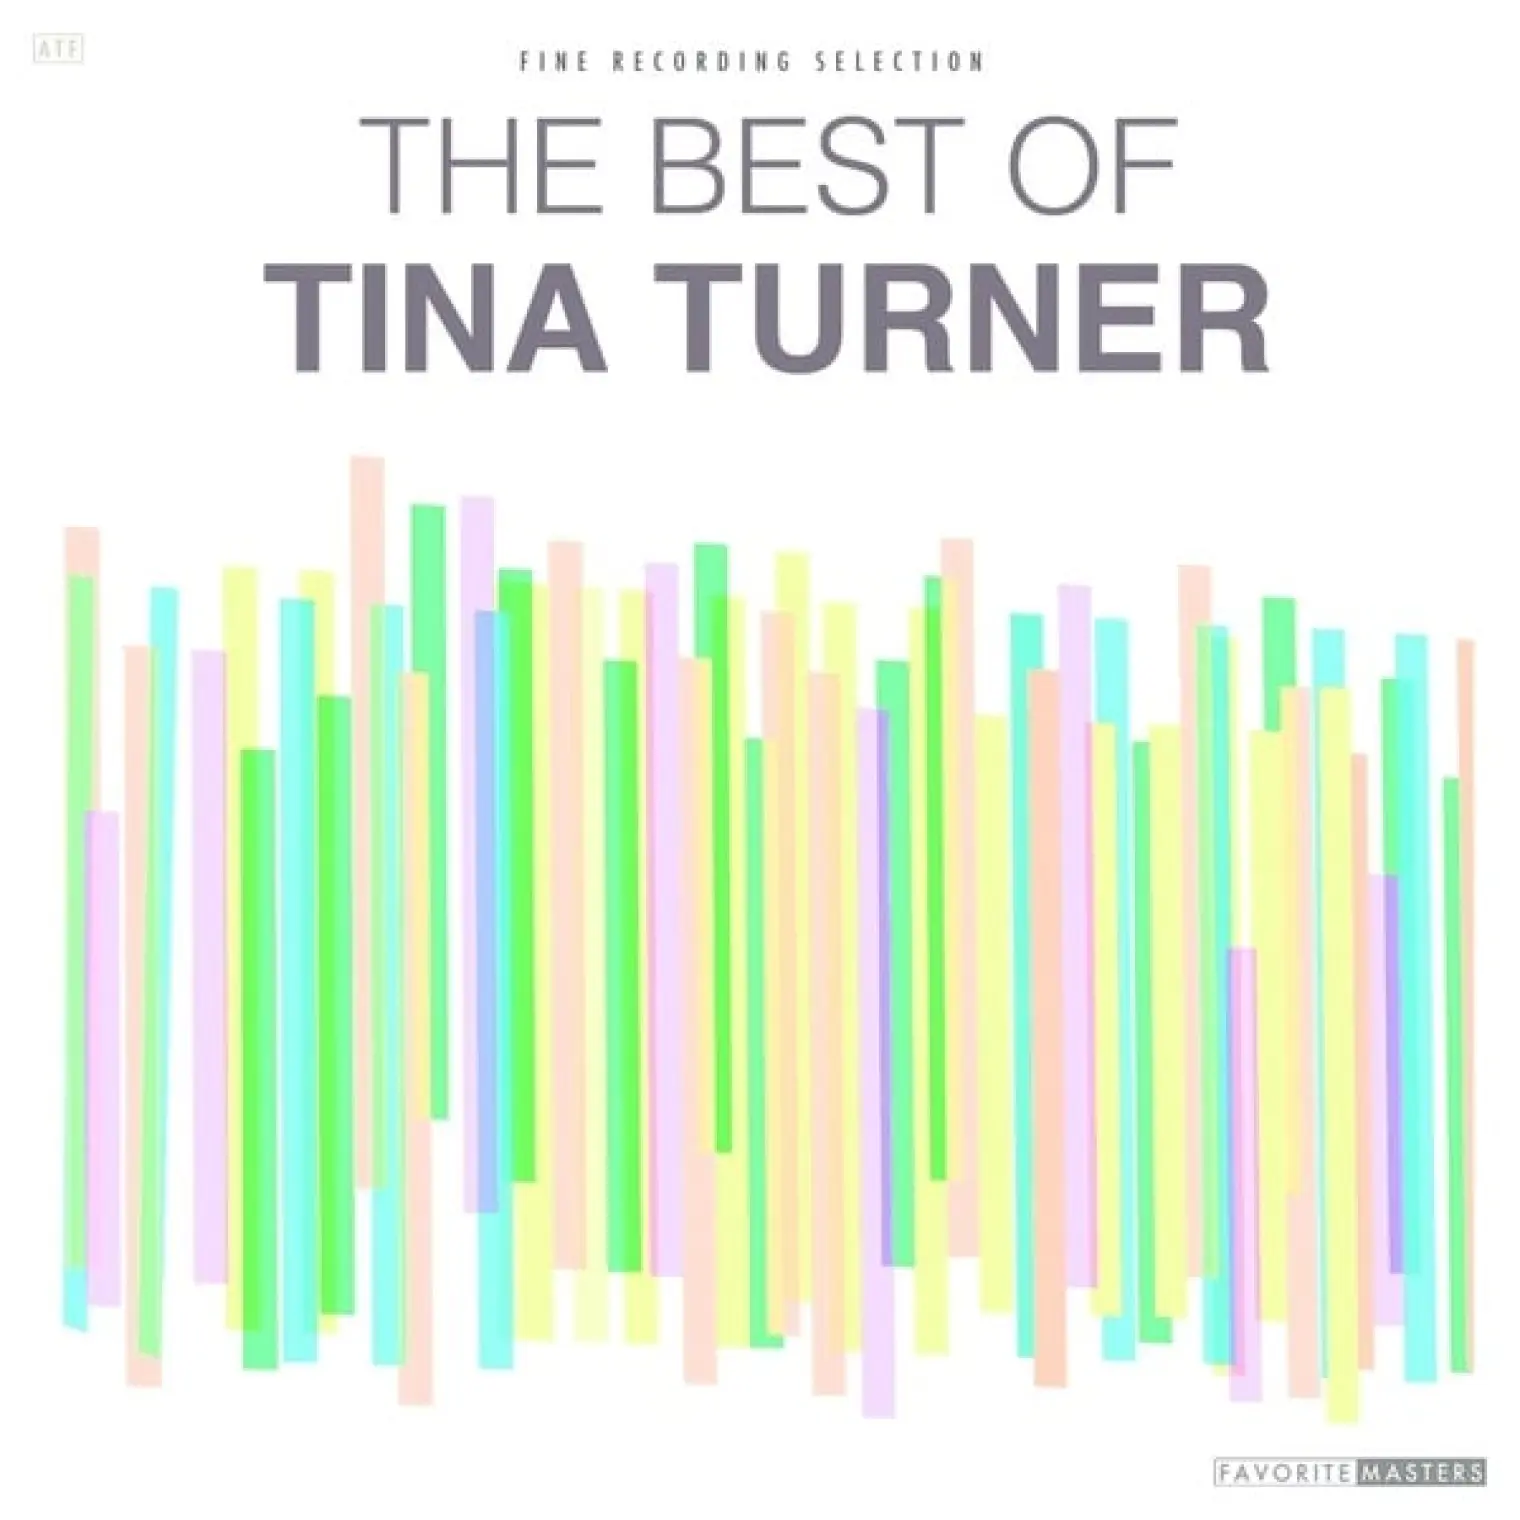 The Best of Tina Turner -  Tina Turner 